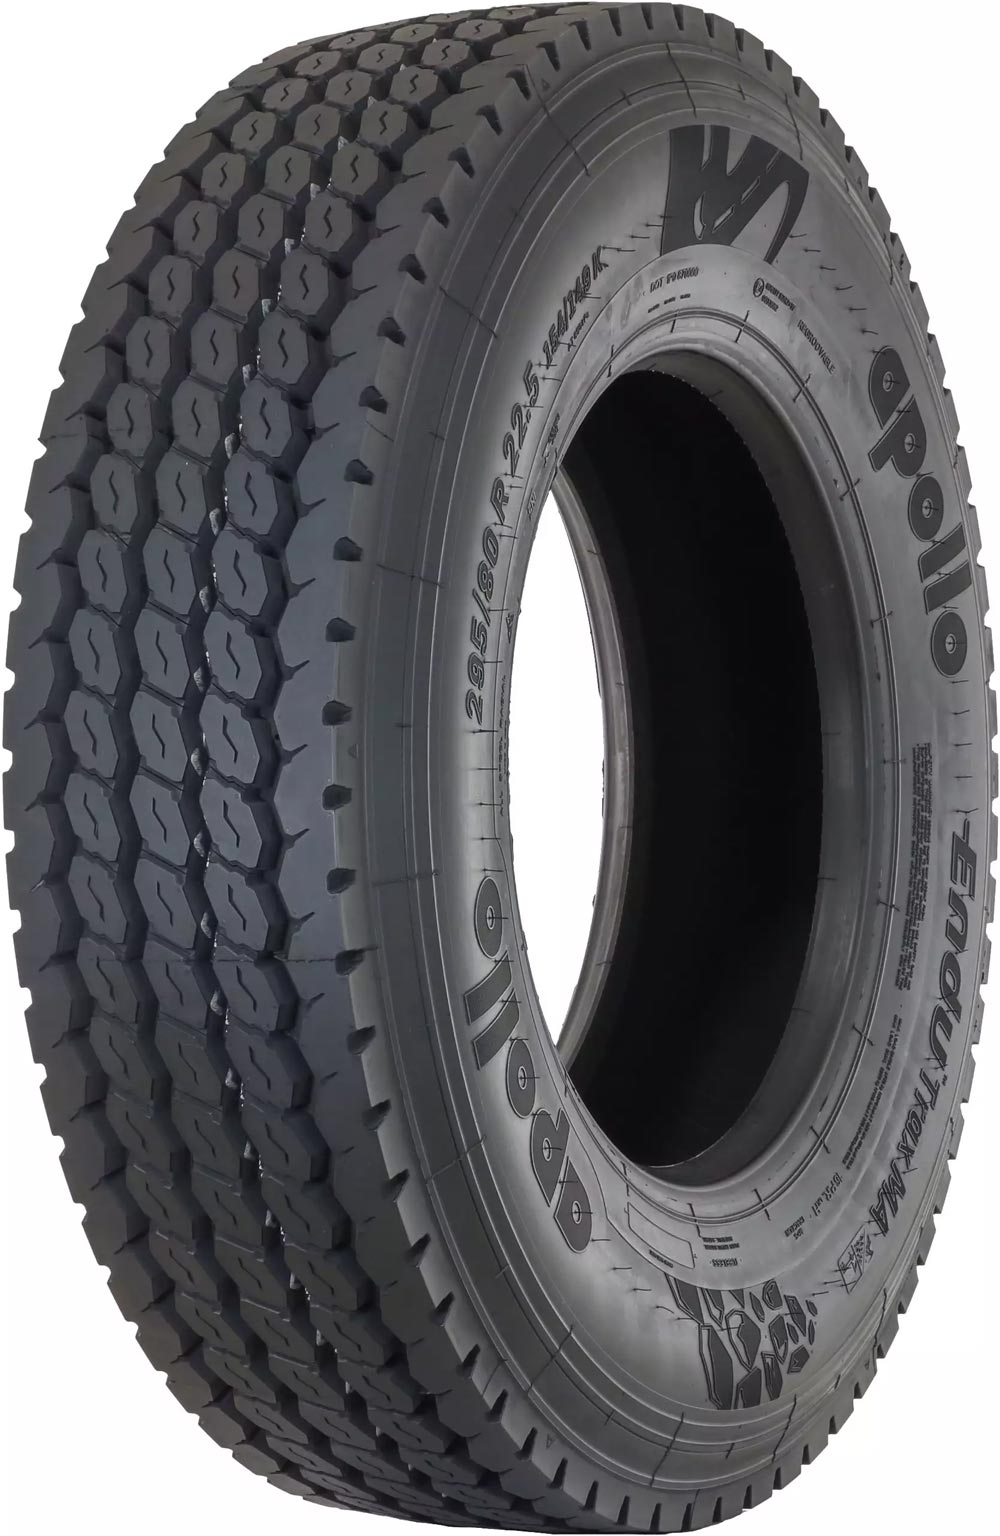 product_type-heavy_tires APOLLO EnduTrax MA 13 R22.5 156K